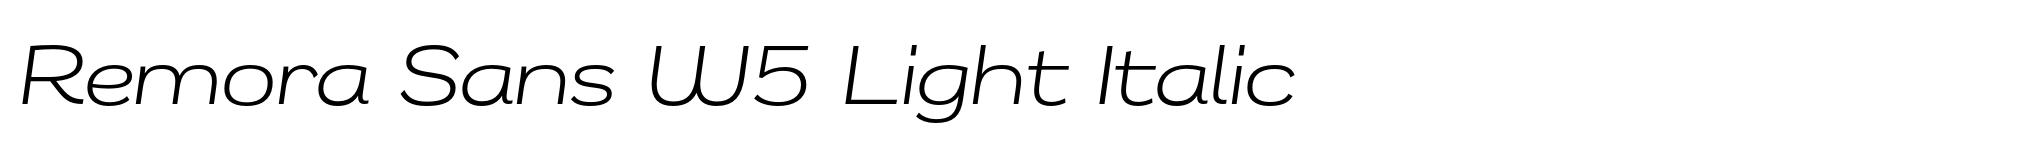 Remora Sans W5 Light Italic image